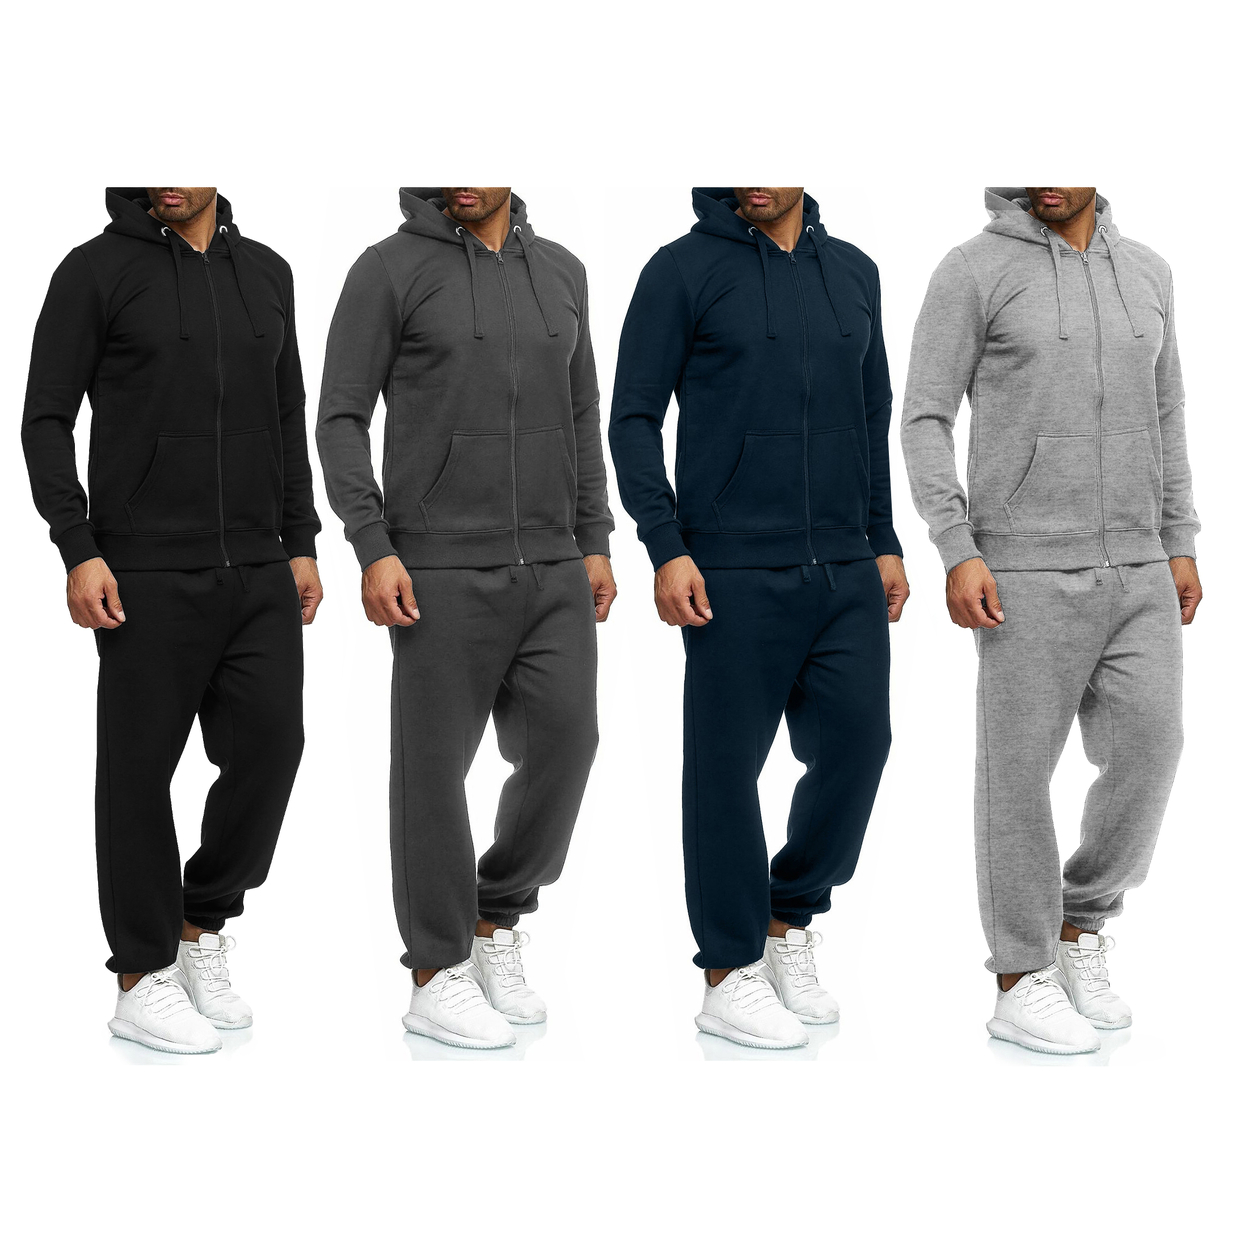 4-Piece: Men's Winter Warm Cozy Athletic Multi-Pockets BIG & TALL Sweatsuit Set - Navy, 3xl